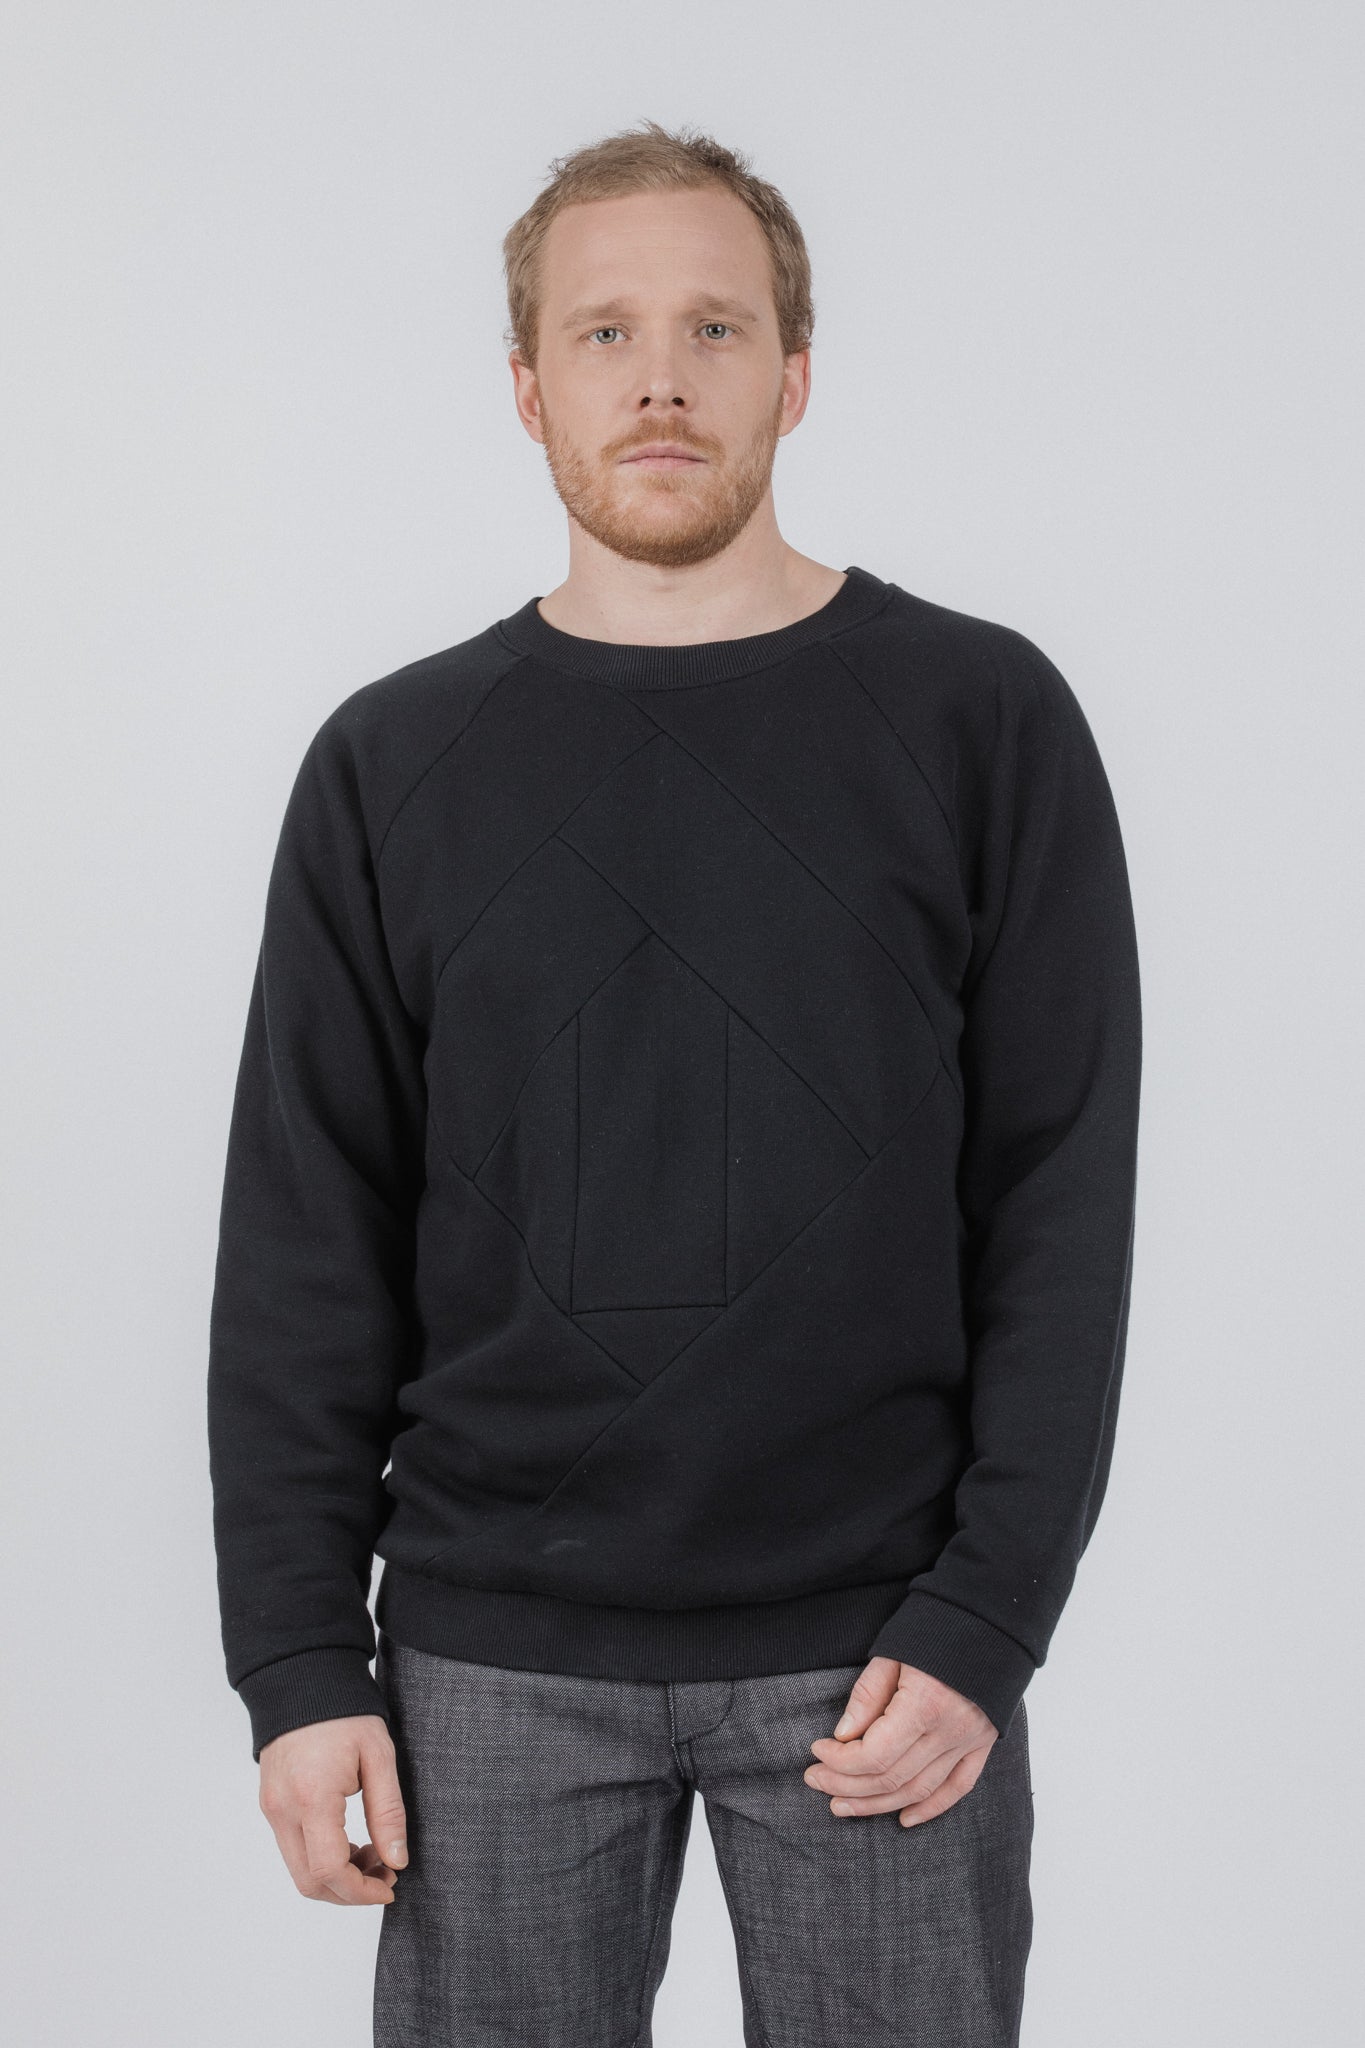 Sweatshirt for men | Black, black - Reet Aus